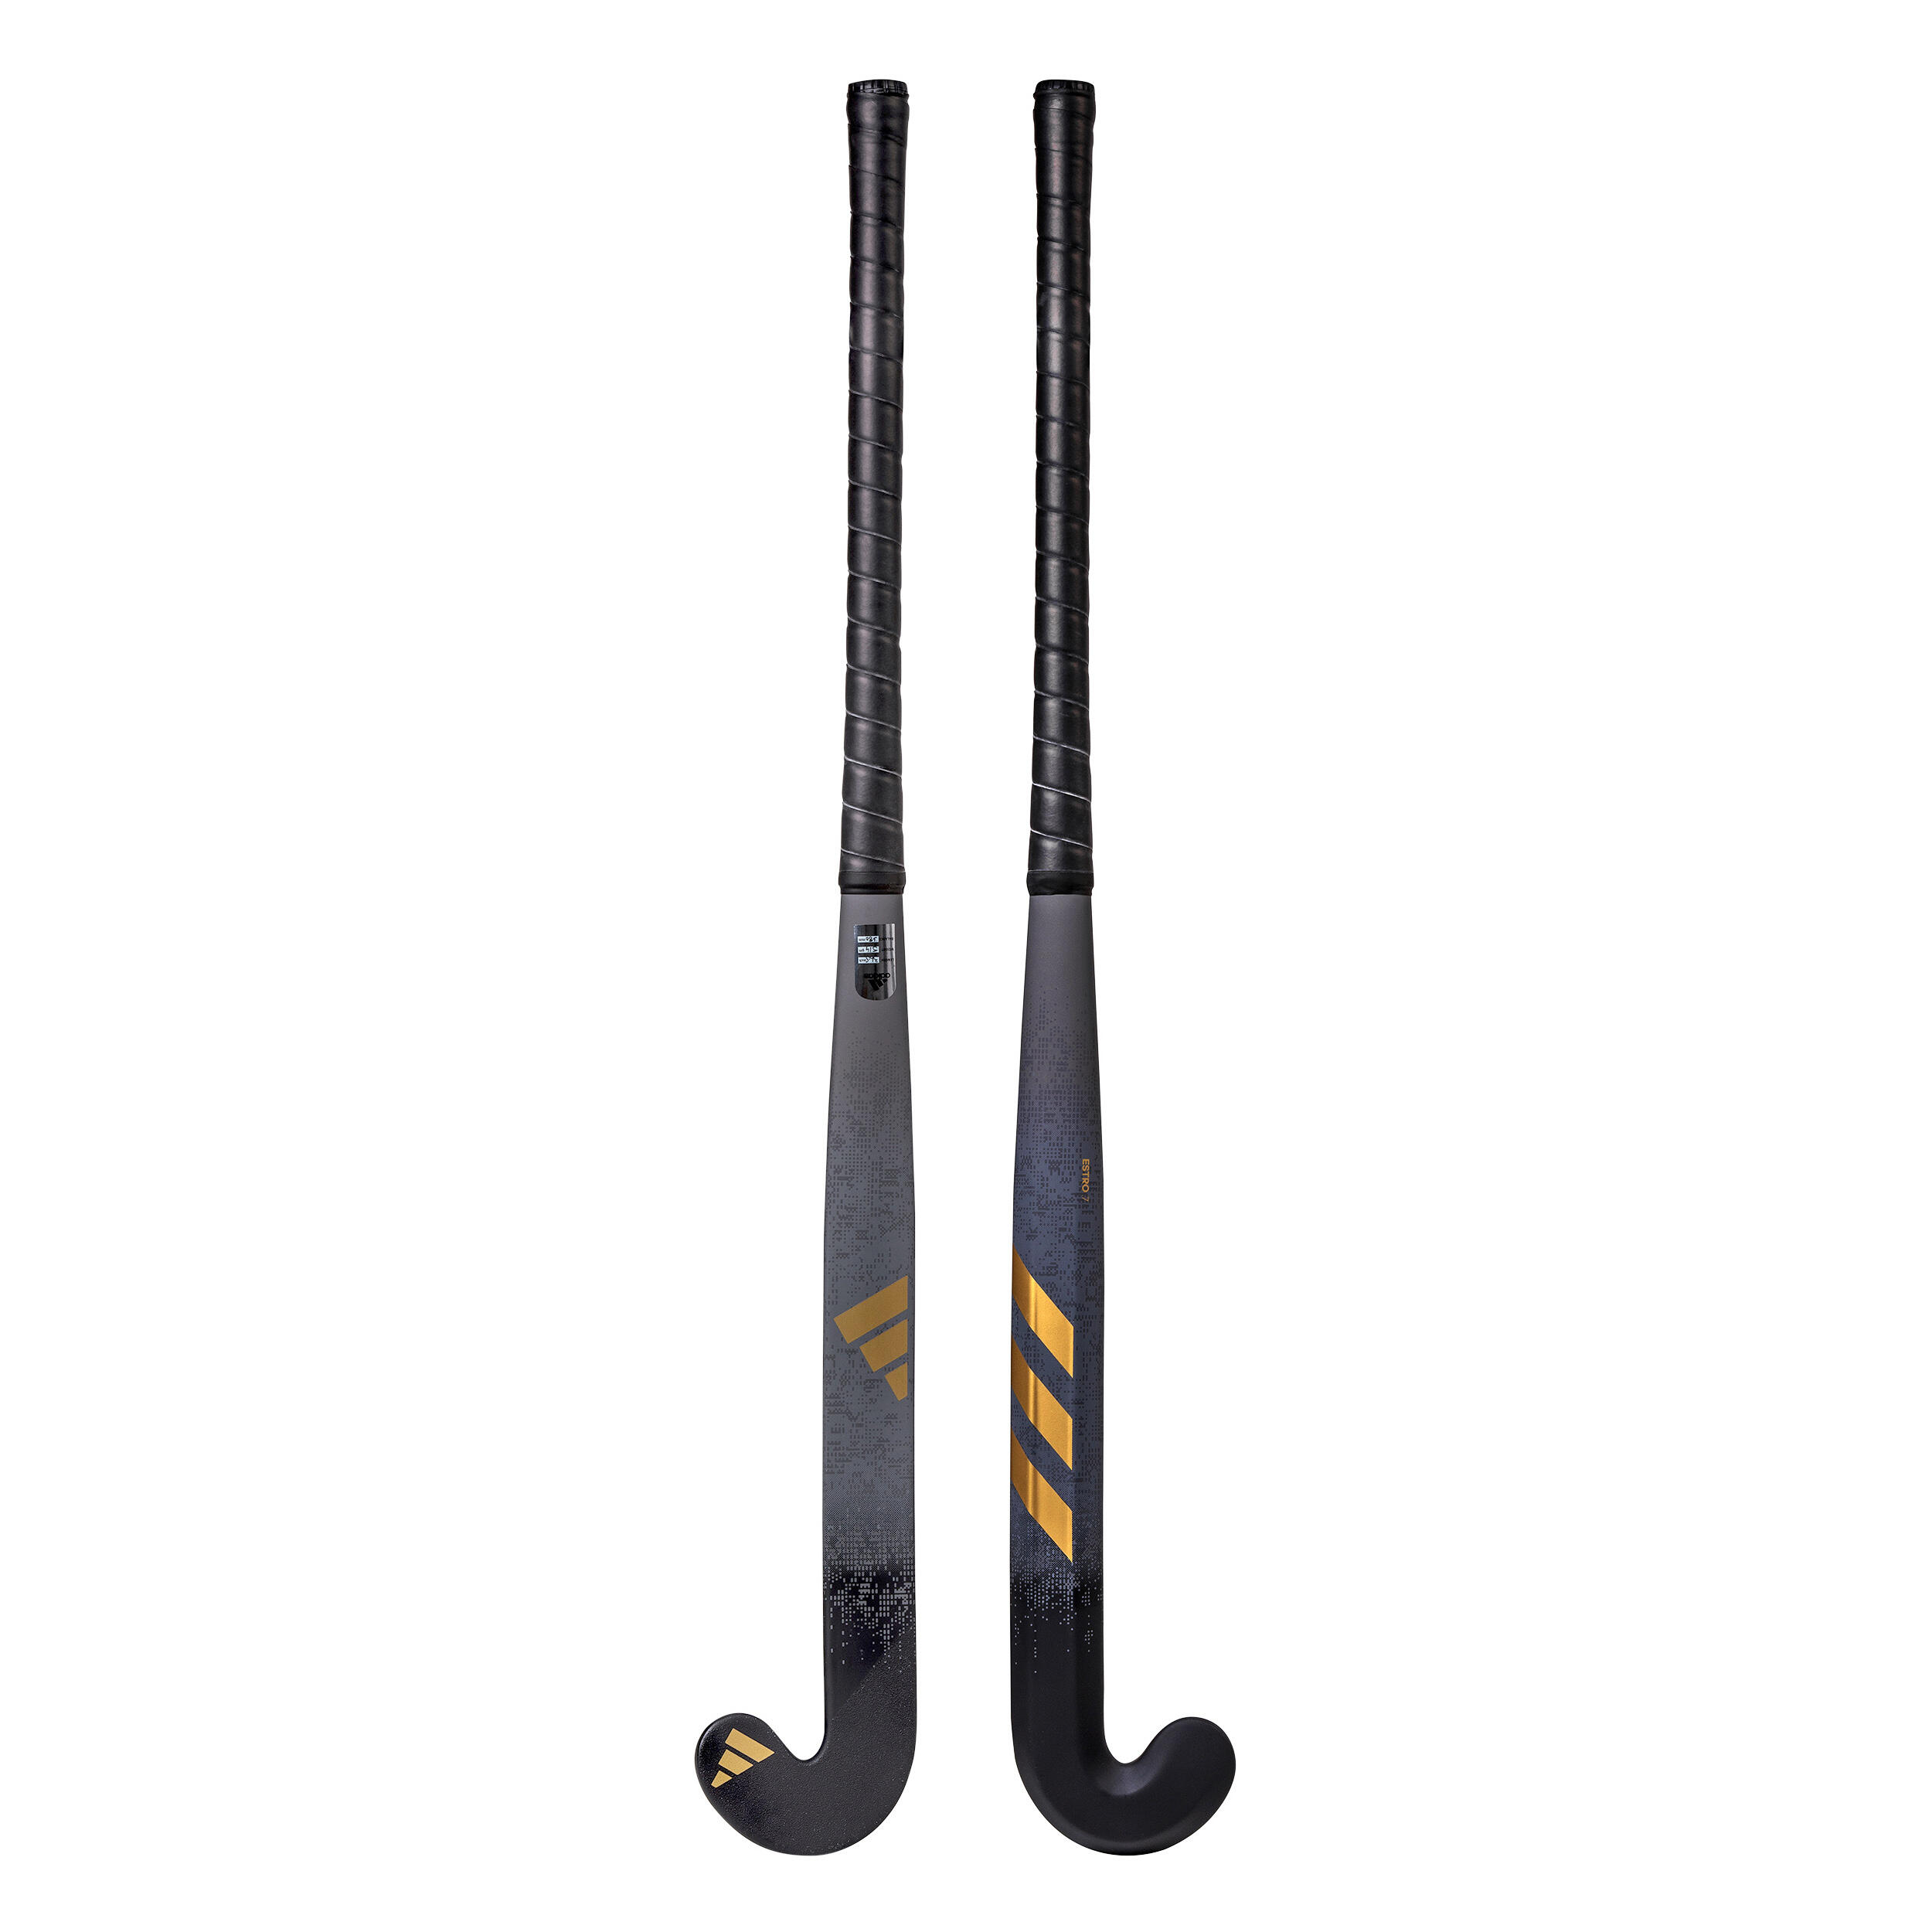 Adult Intermediate 20% Carbon Mid Bow Field Hockey Stick Estro .7 - Black/GoldBlack and gold 13/13